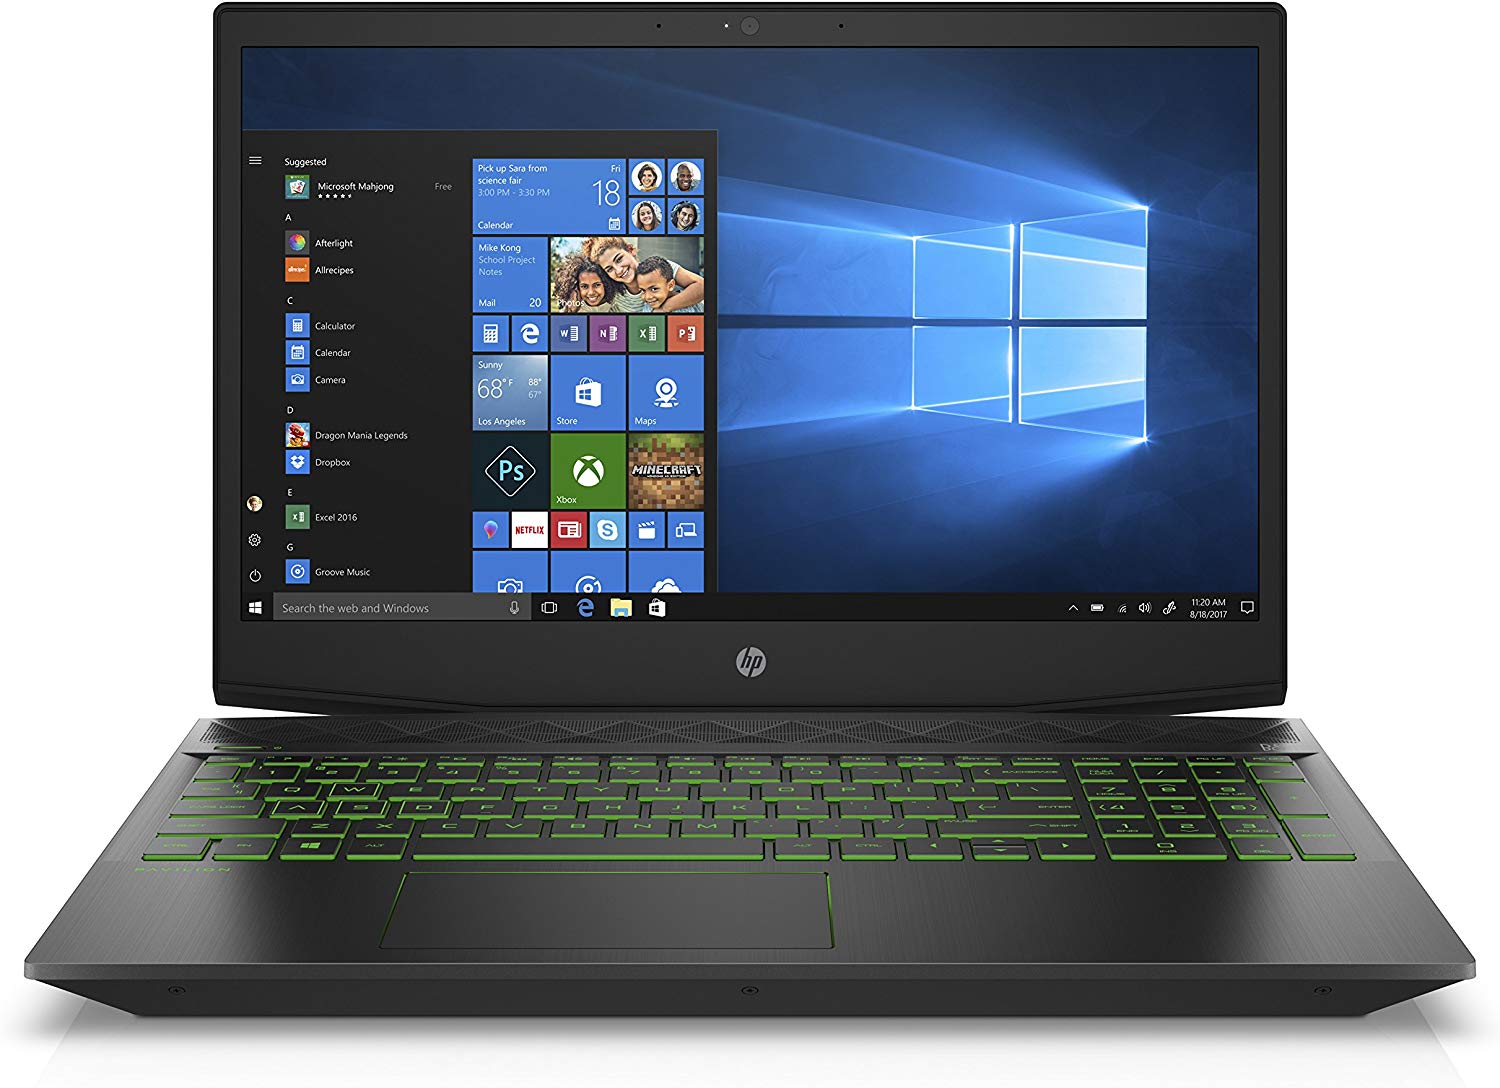 HP Pavilion Gaming Laptop,15.6" FHD IPS - Affordable Gaming Laptops